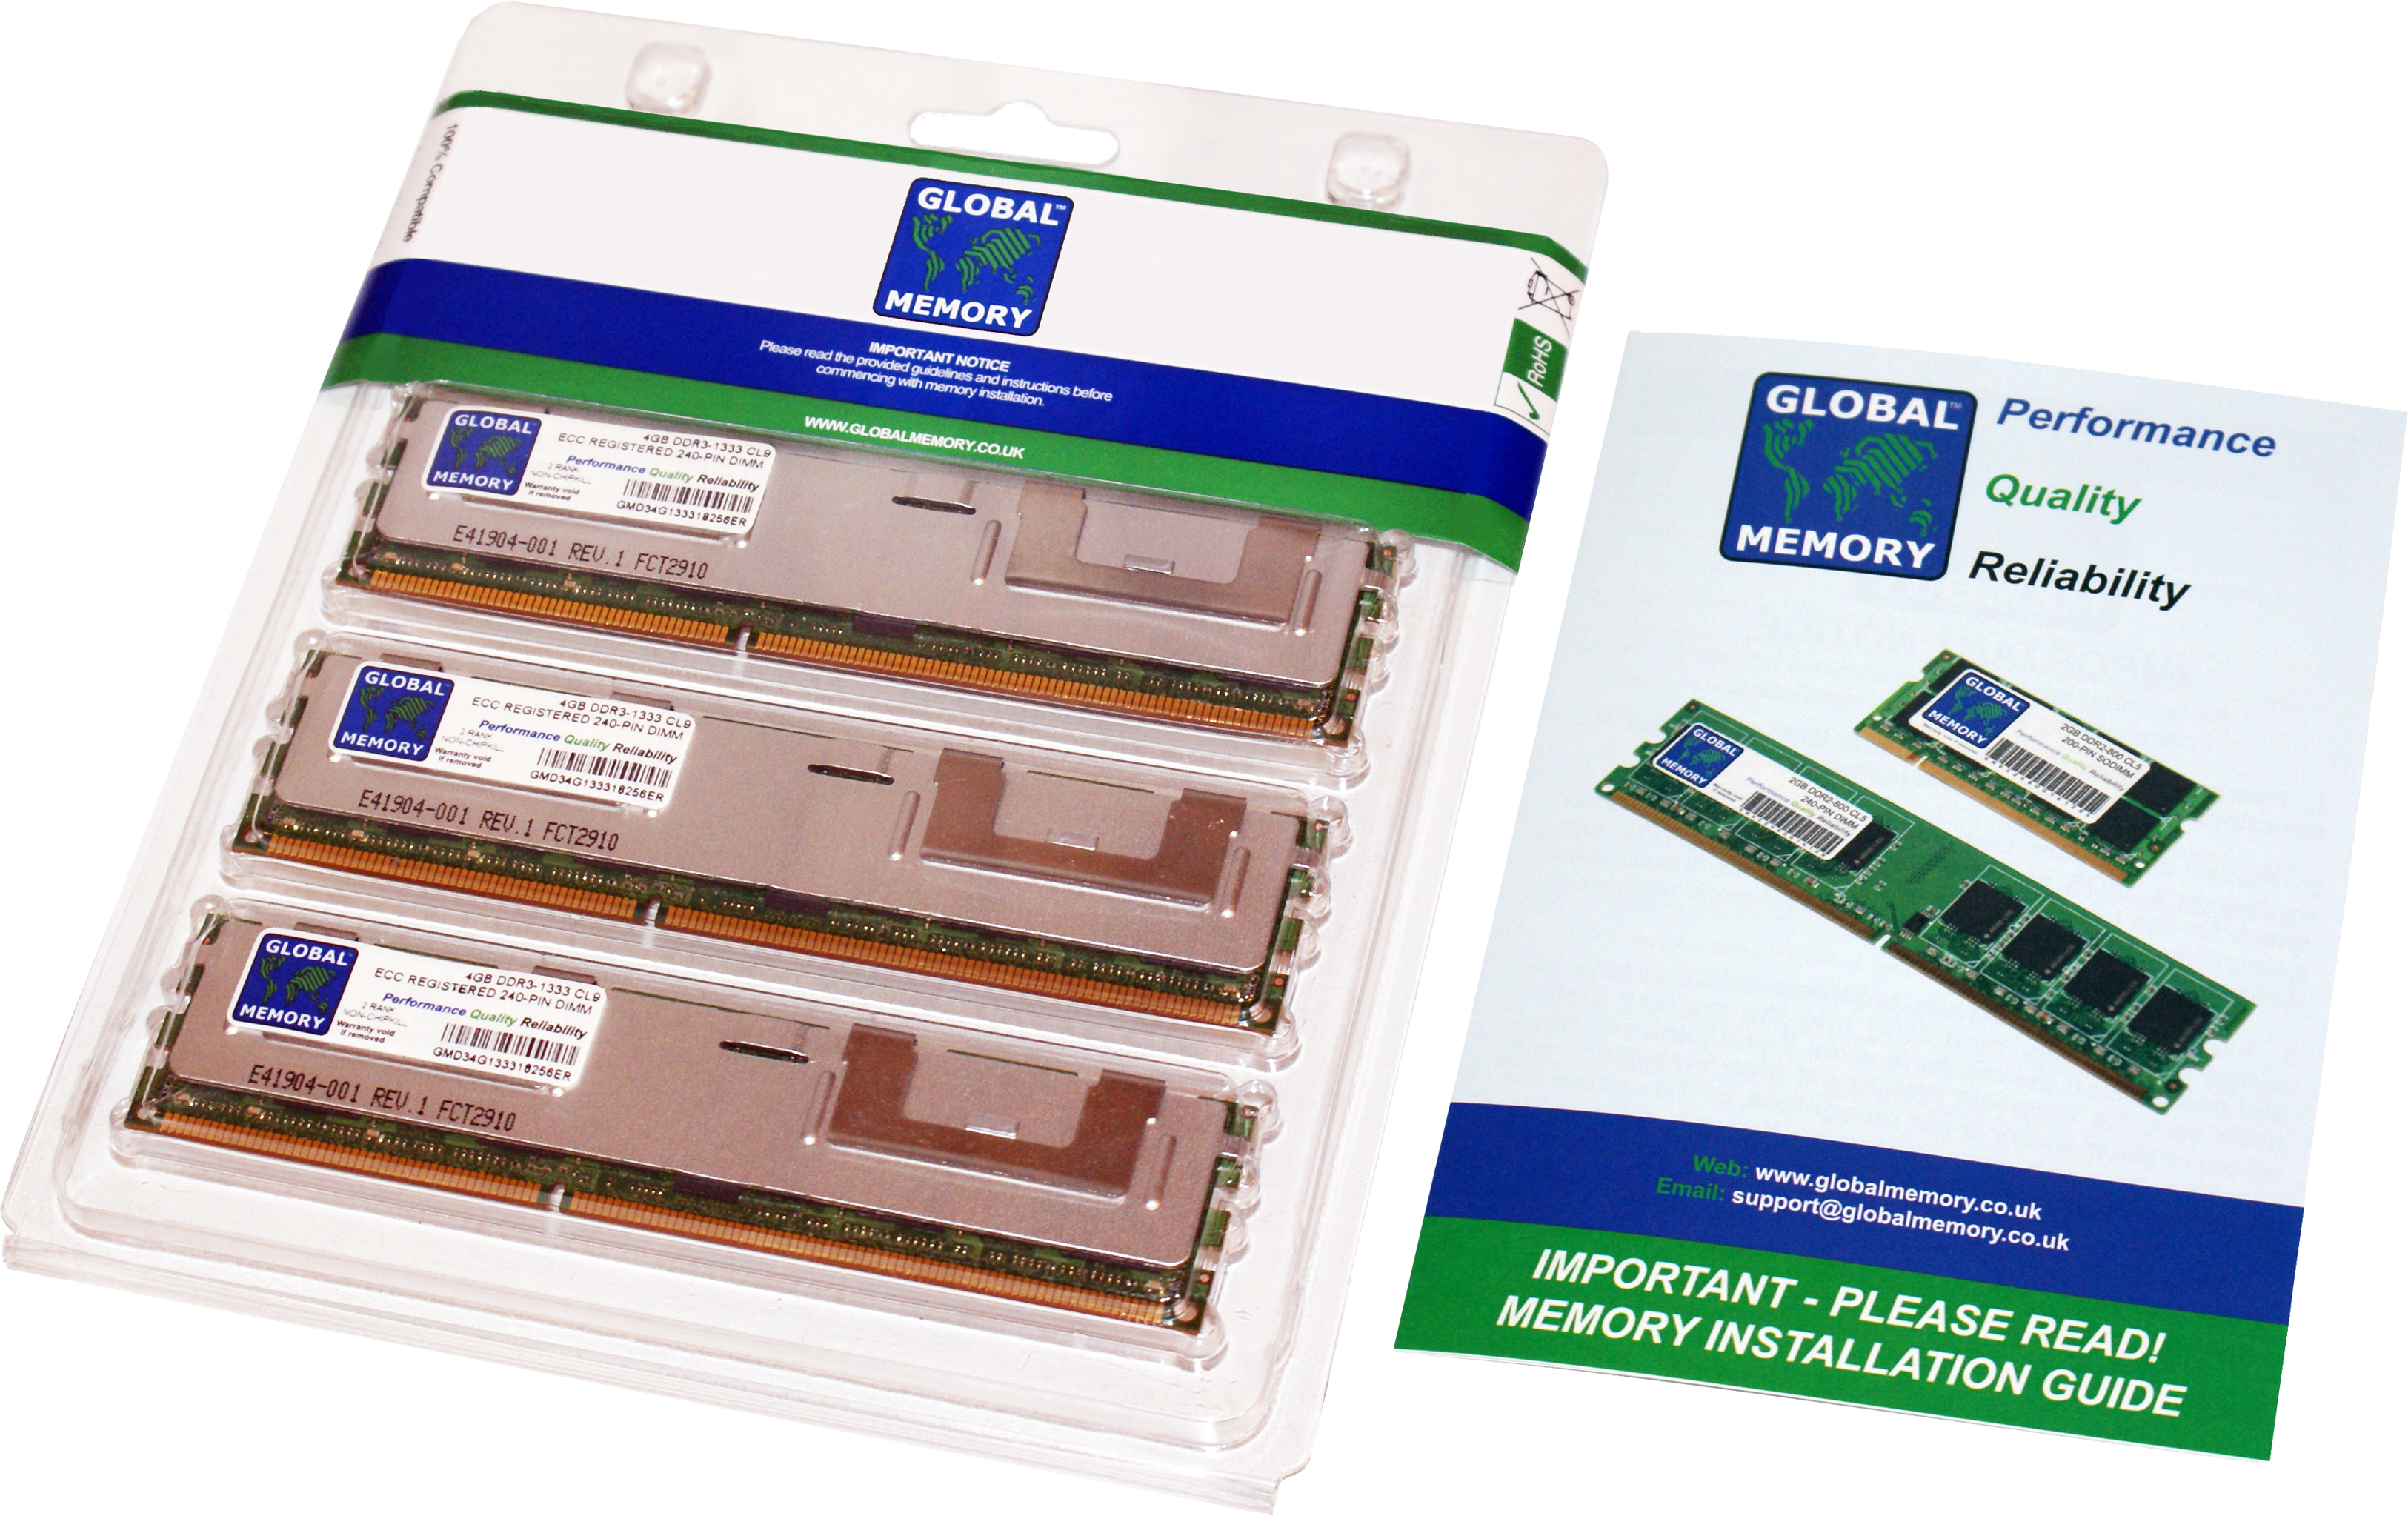 48GB (3 x 16GB) DDR3 1066/1333MHz 240-PIN ECC REGISTERED DIMM (RDIMM) MEMORY RAM KIT FOR FUJITSU SERVERS/WORKSTATIONS (12 RANK KIT NON-CHIPKILL)